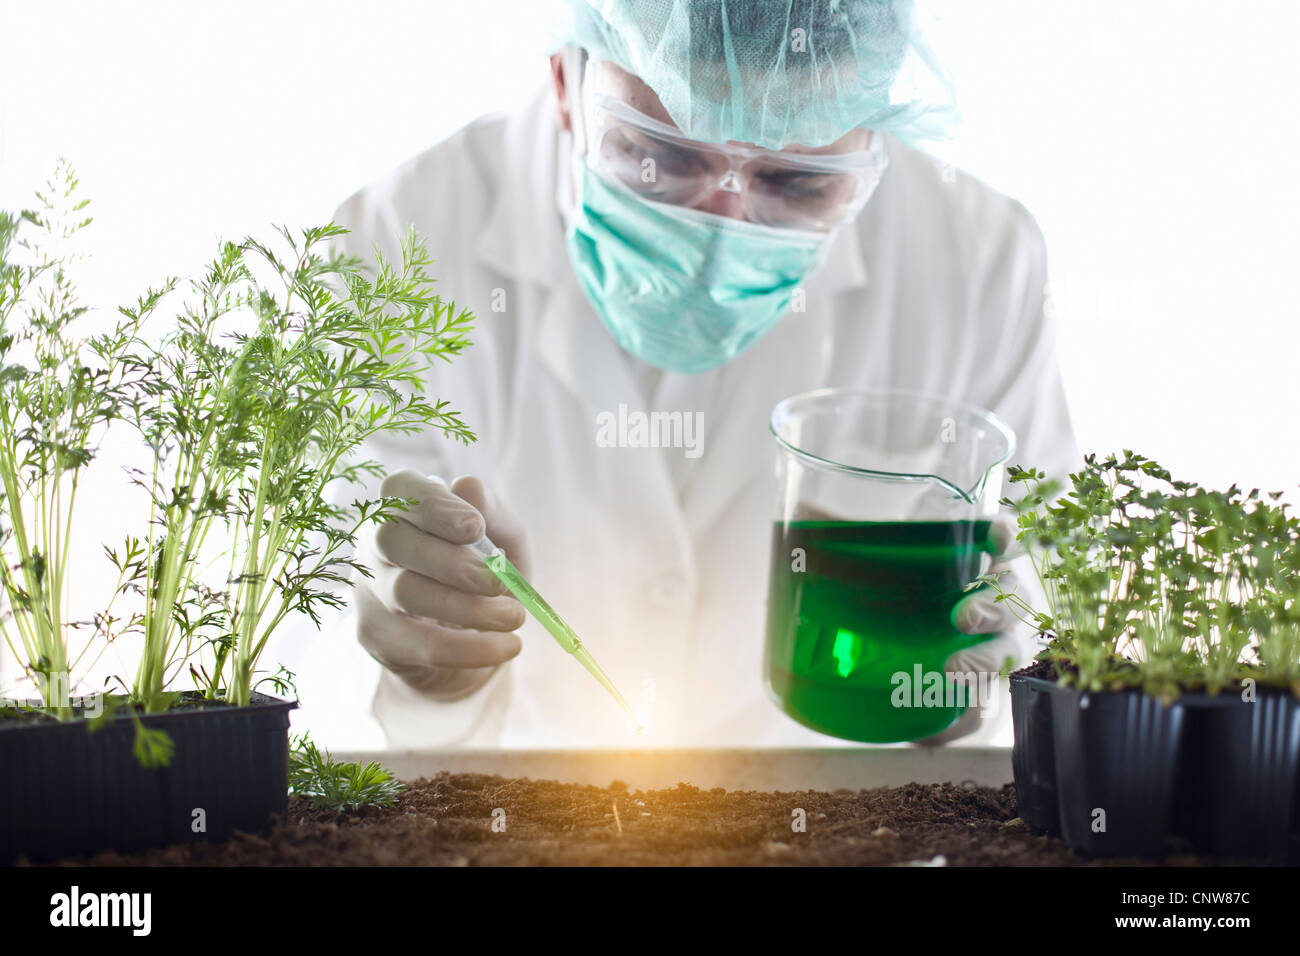 Scientist dropping liquid on plants Stock Photo